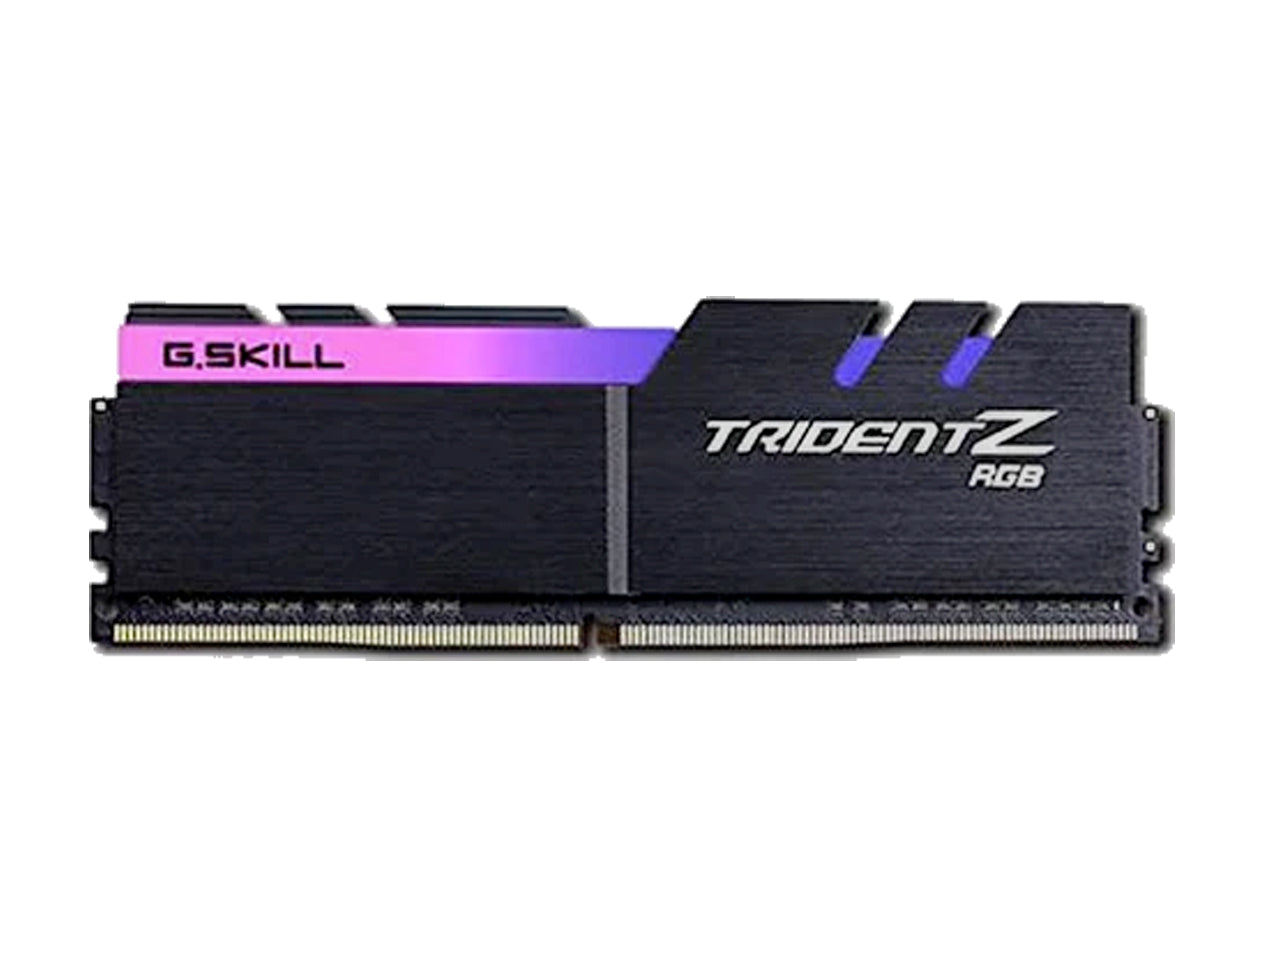 G.SKILL TRIDENT Z RGB SERIES 8GB (8GBX1) DDR4 3200MHZ RAM